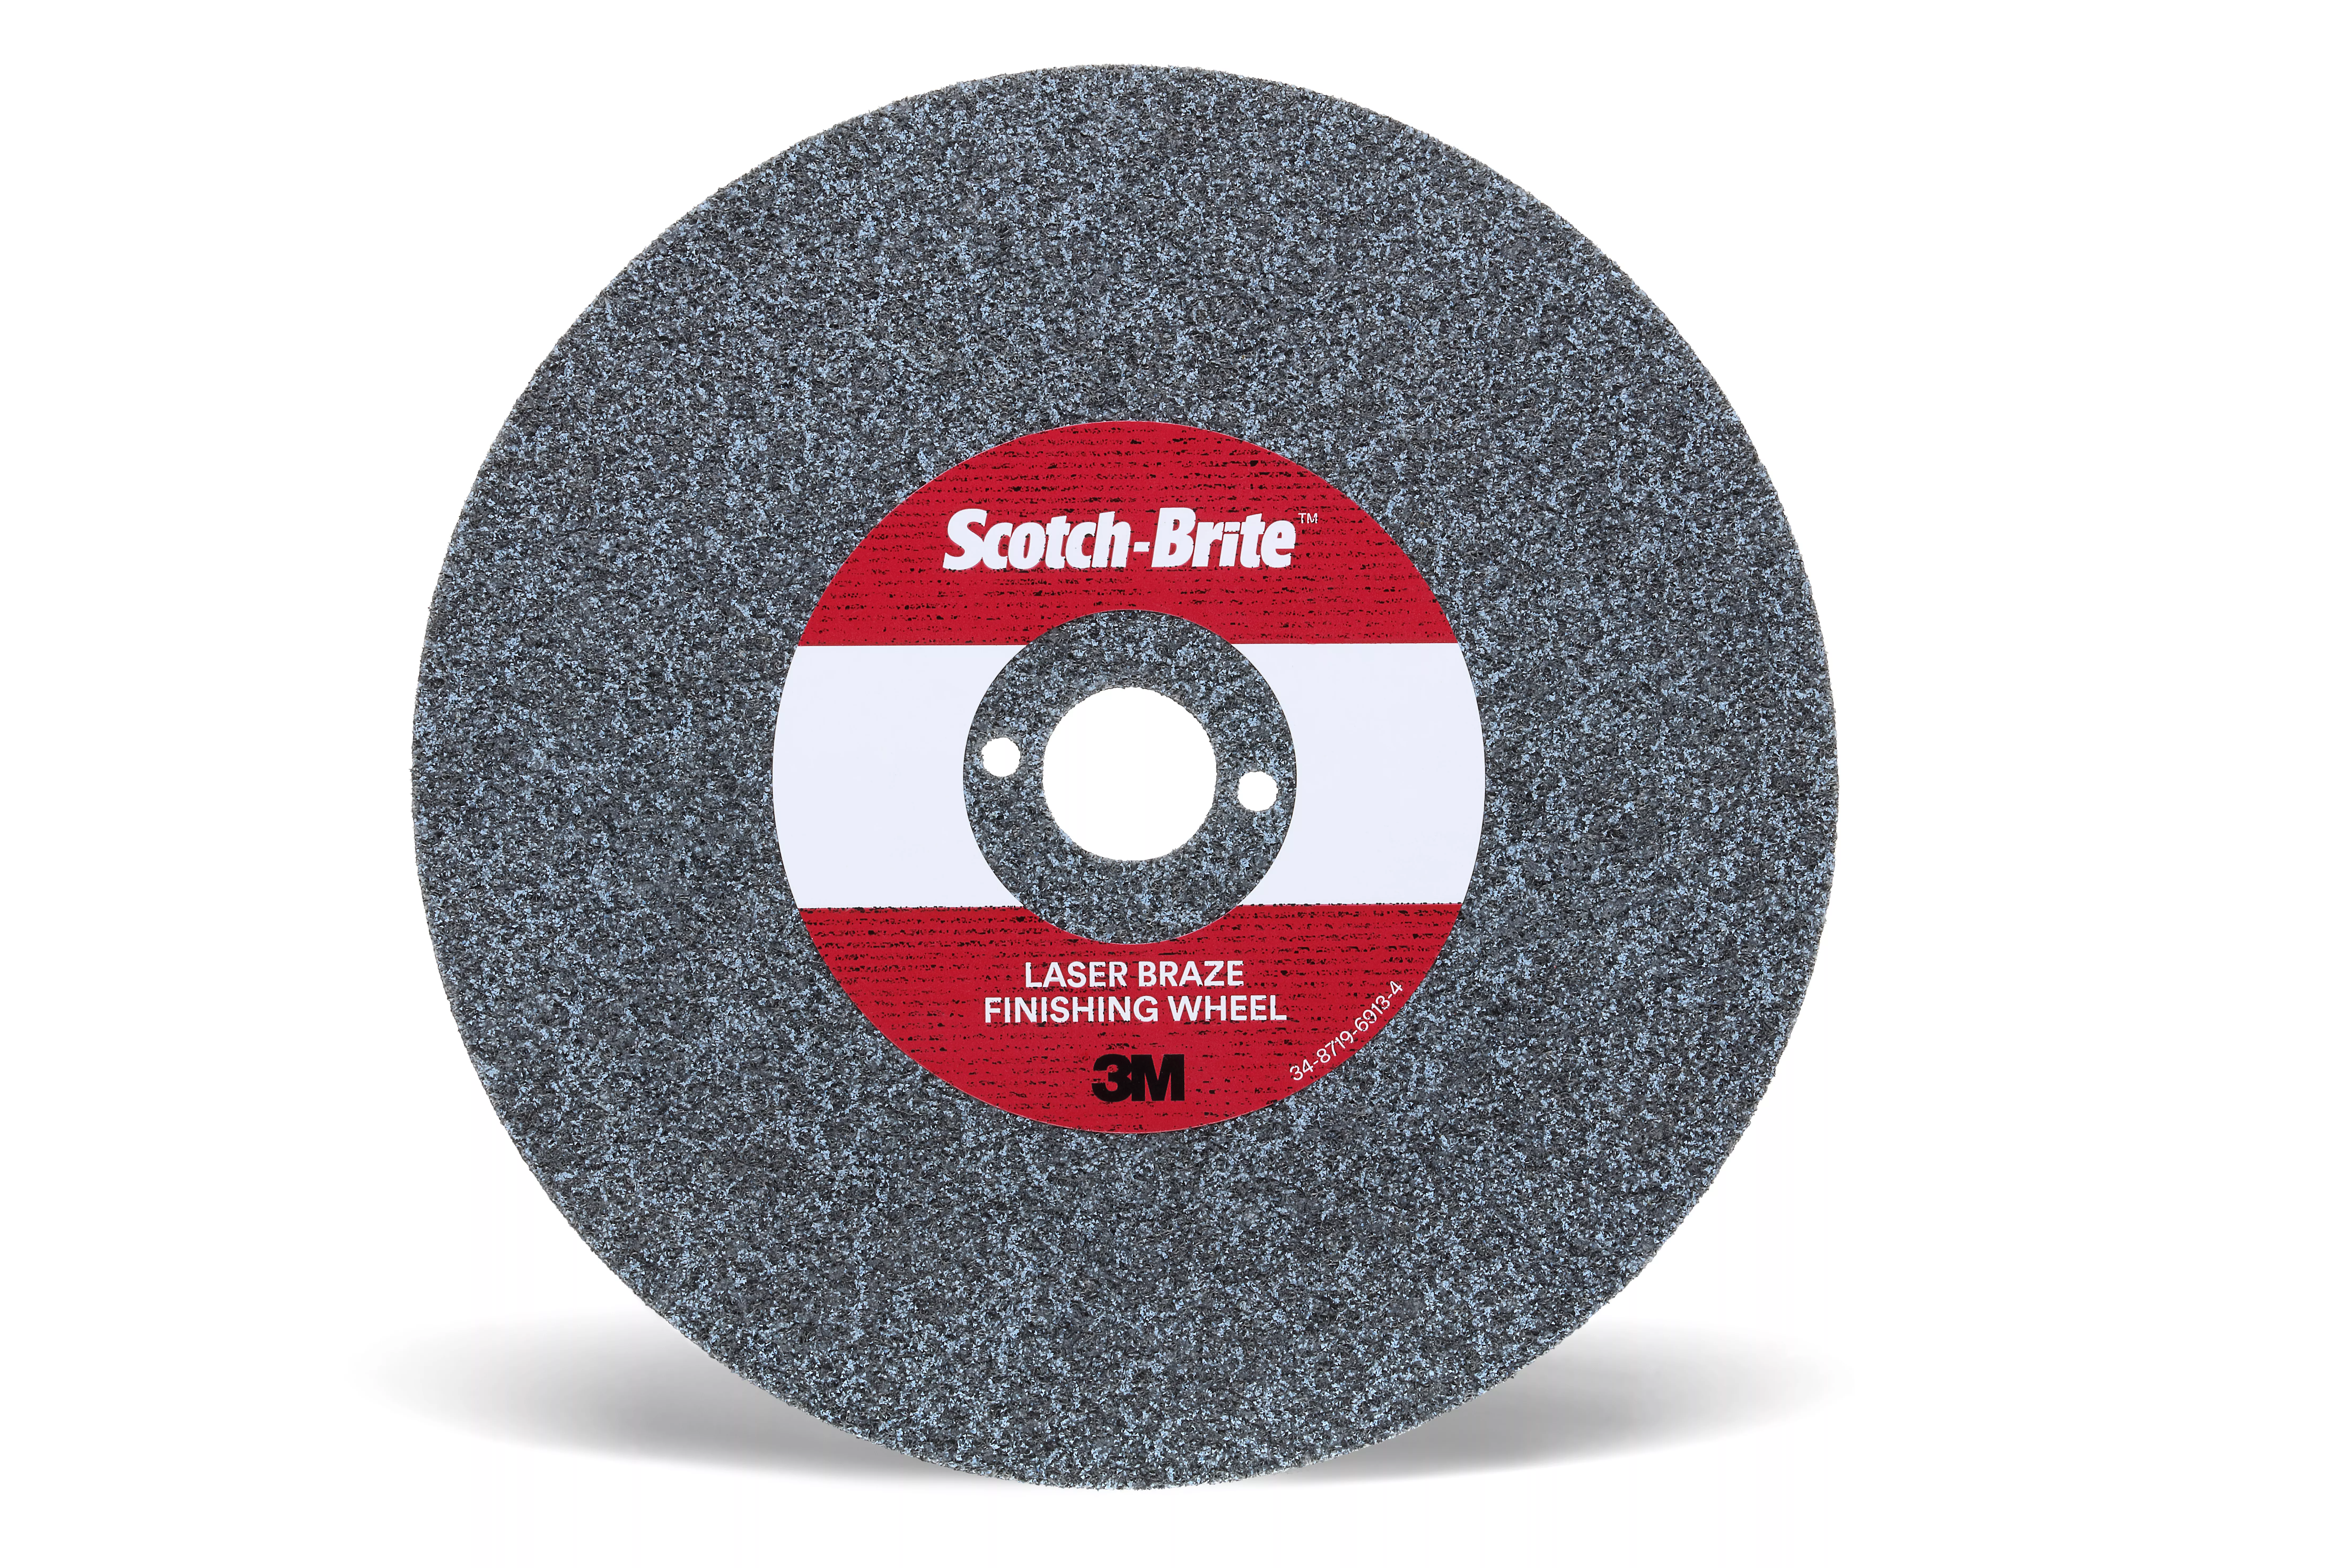 SKU 7100115797 | Scotch-Brite™ Laser Braze Finishing Wheel